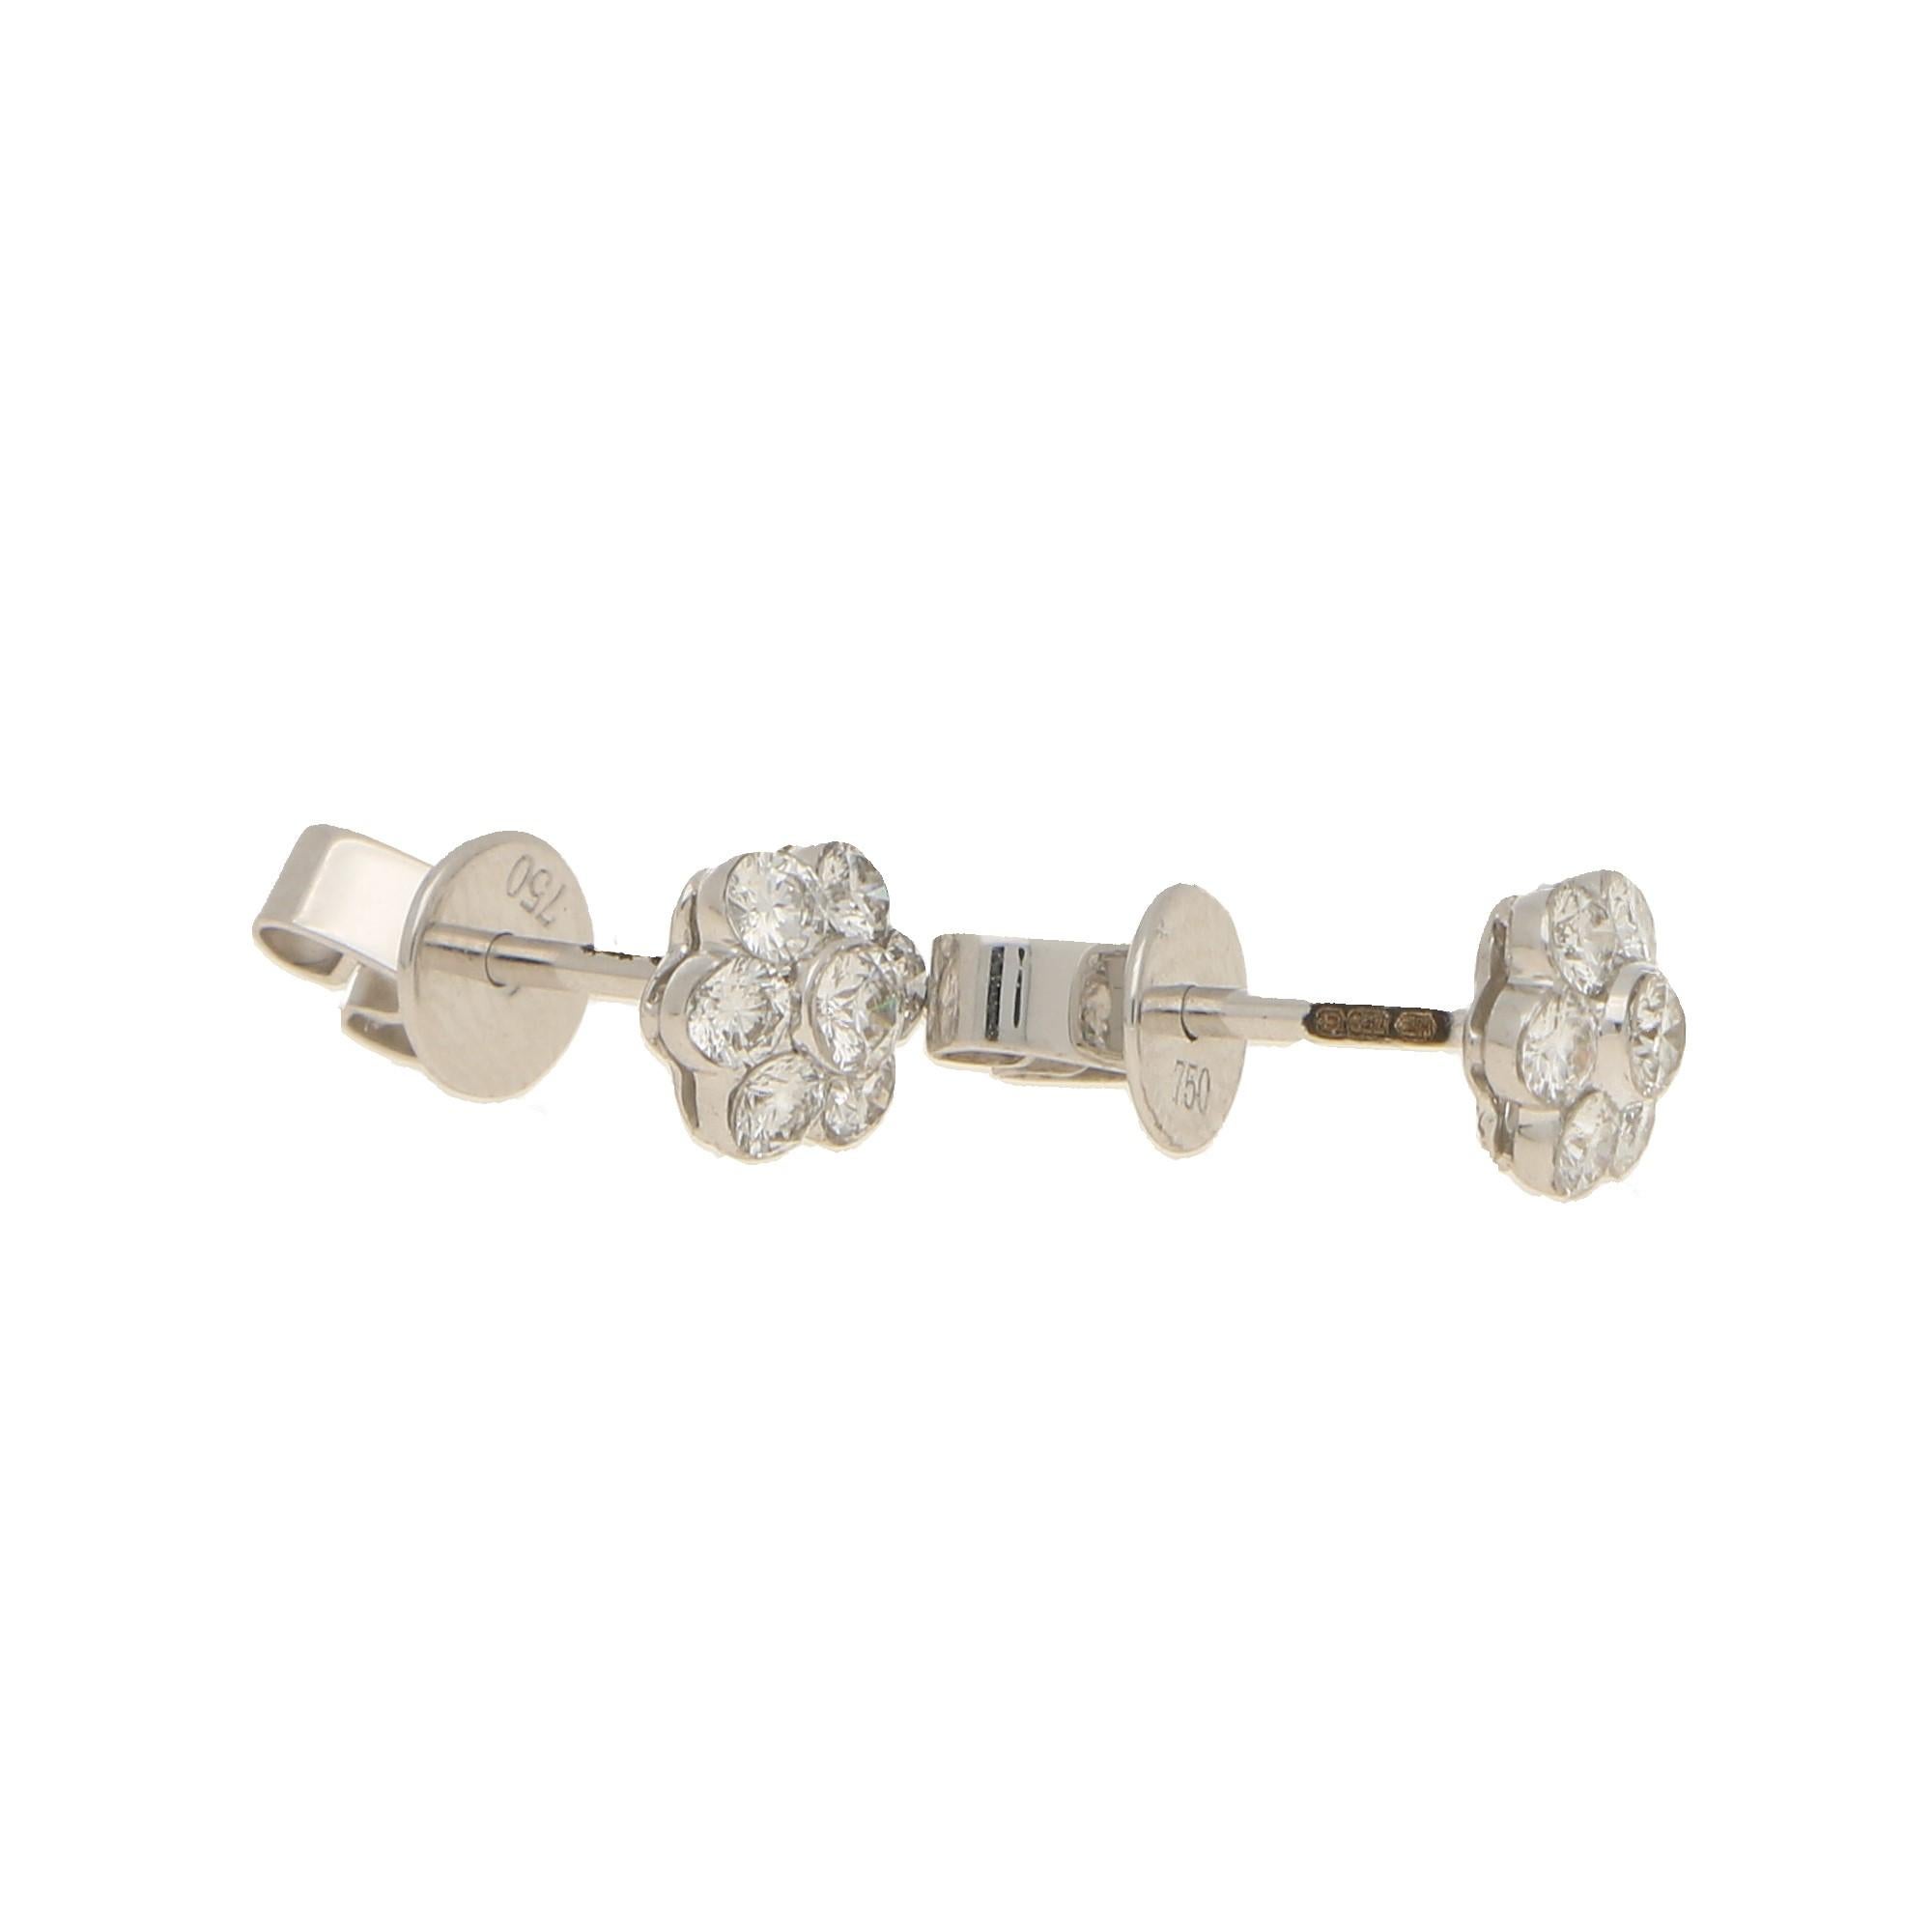 Round Cut Floral Diamond Stud Earrings in 18 Karat White Gold